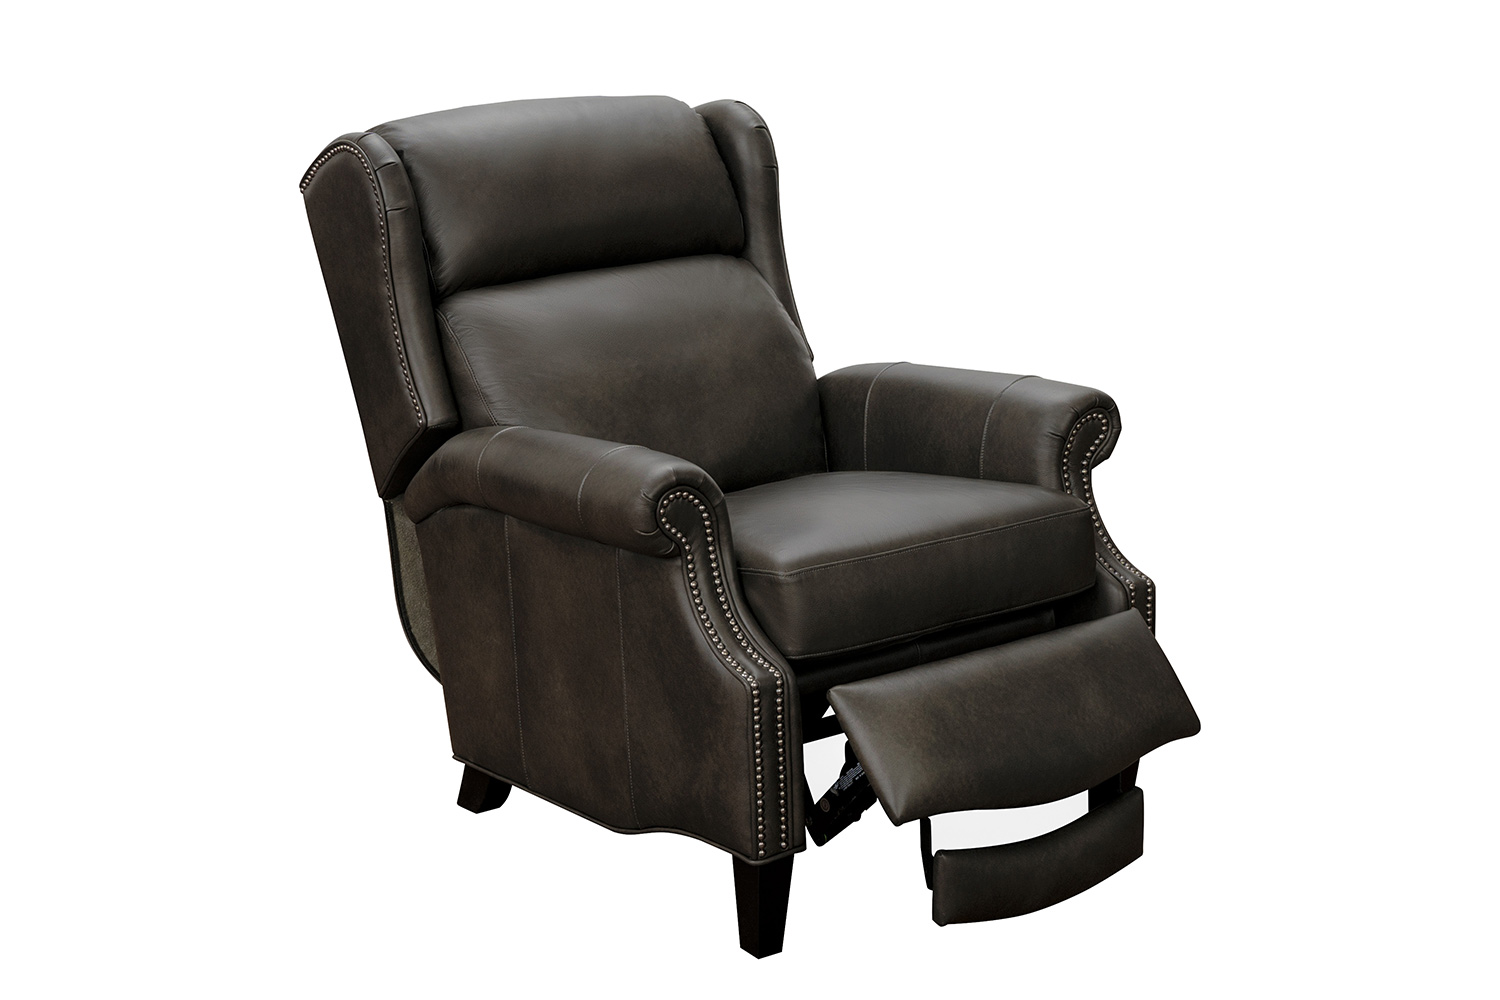 Barcalounger Philadelphia Recliner Chair - Ashford Graphite/All Leather